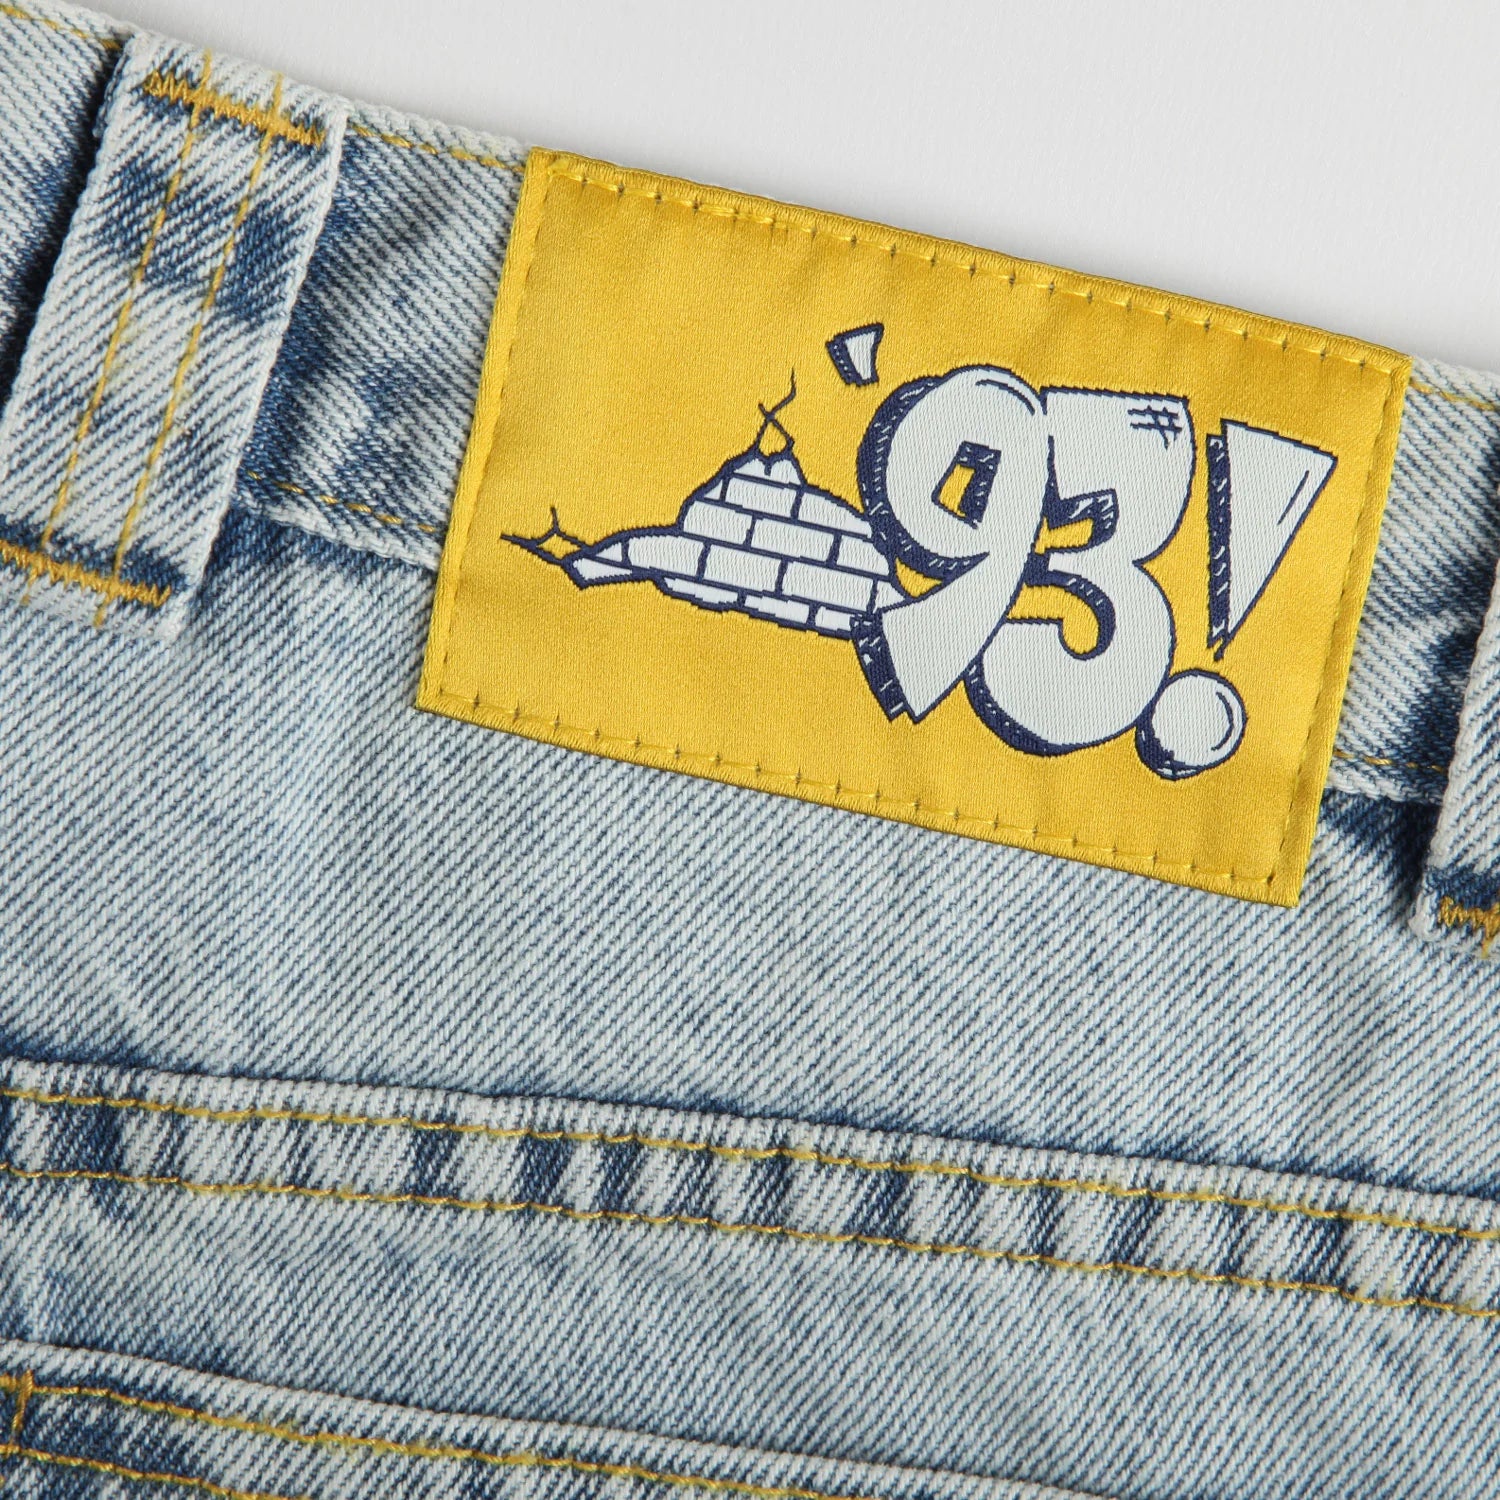 Polar '93 Jeans